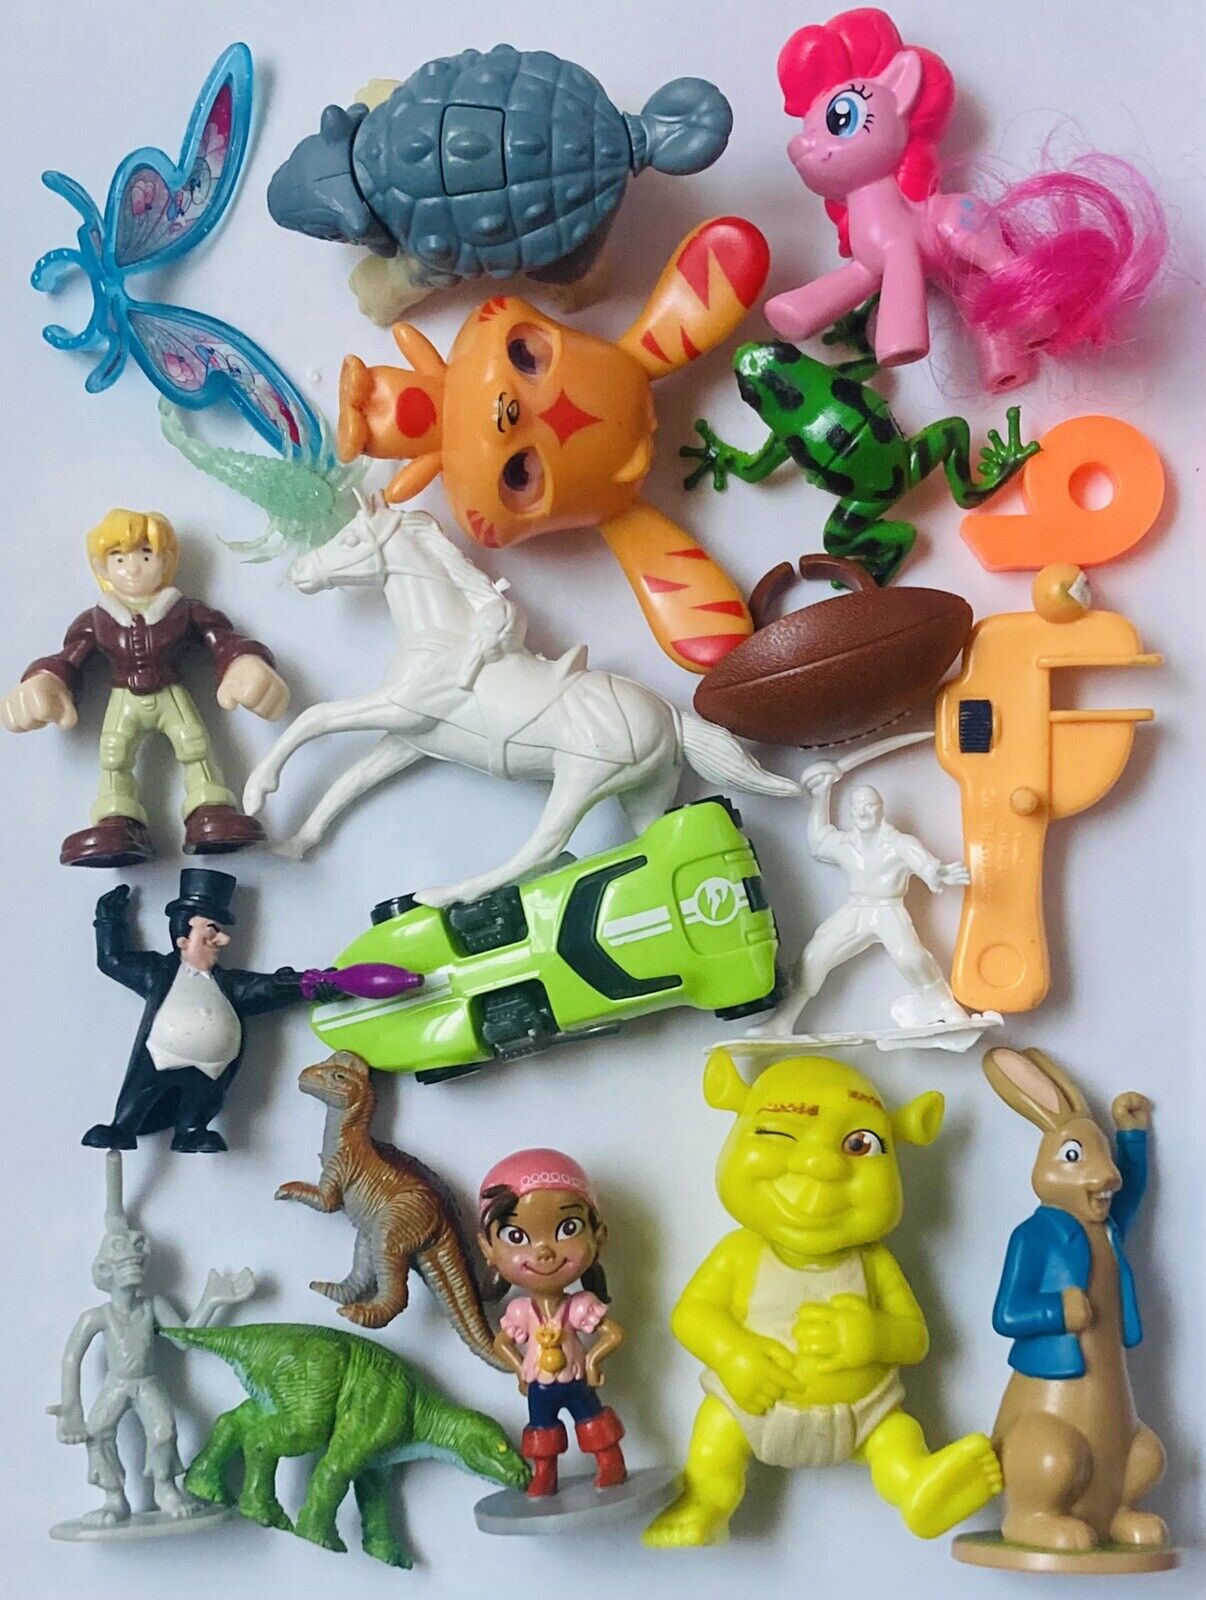 Mixed Toy lot - 20 small toys - Shrek, Dinosaurs, My Little Pony